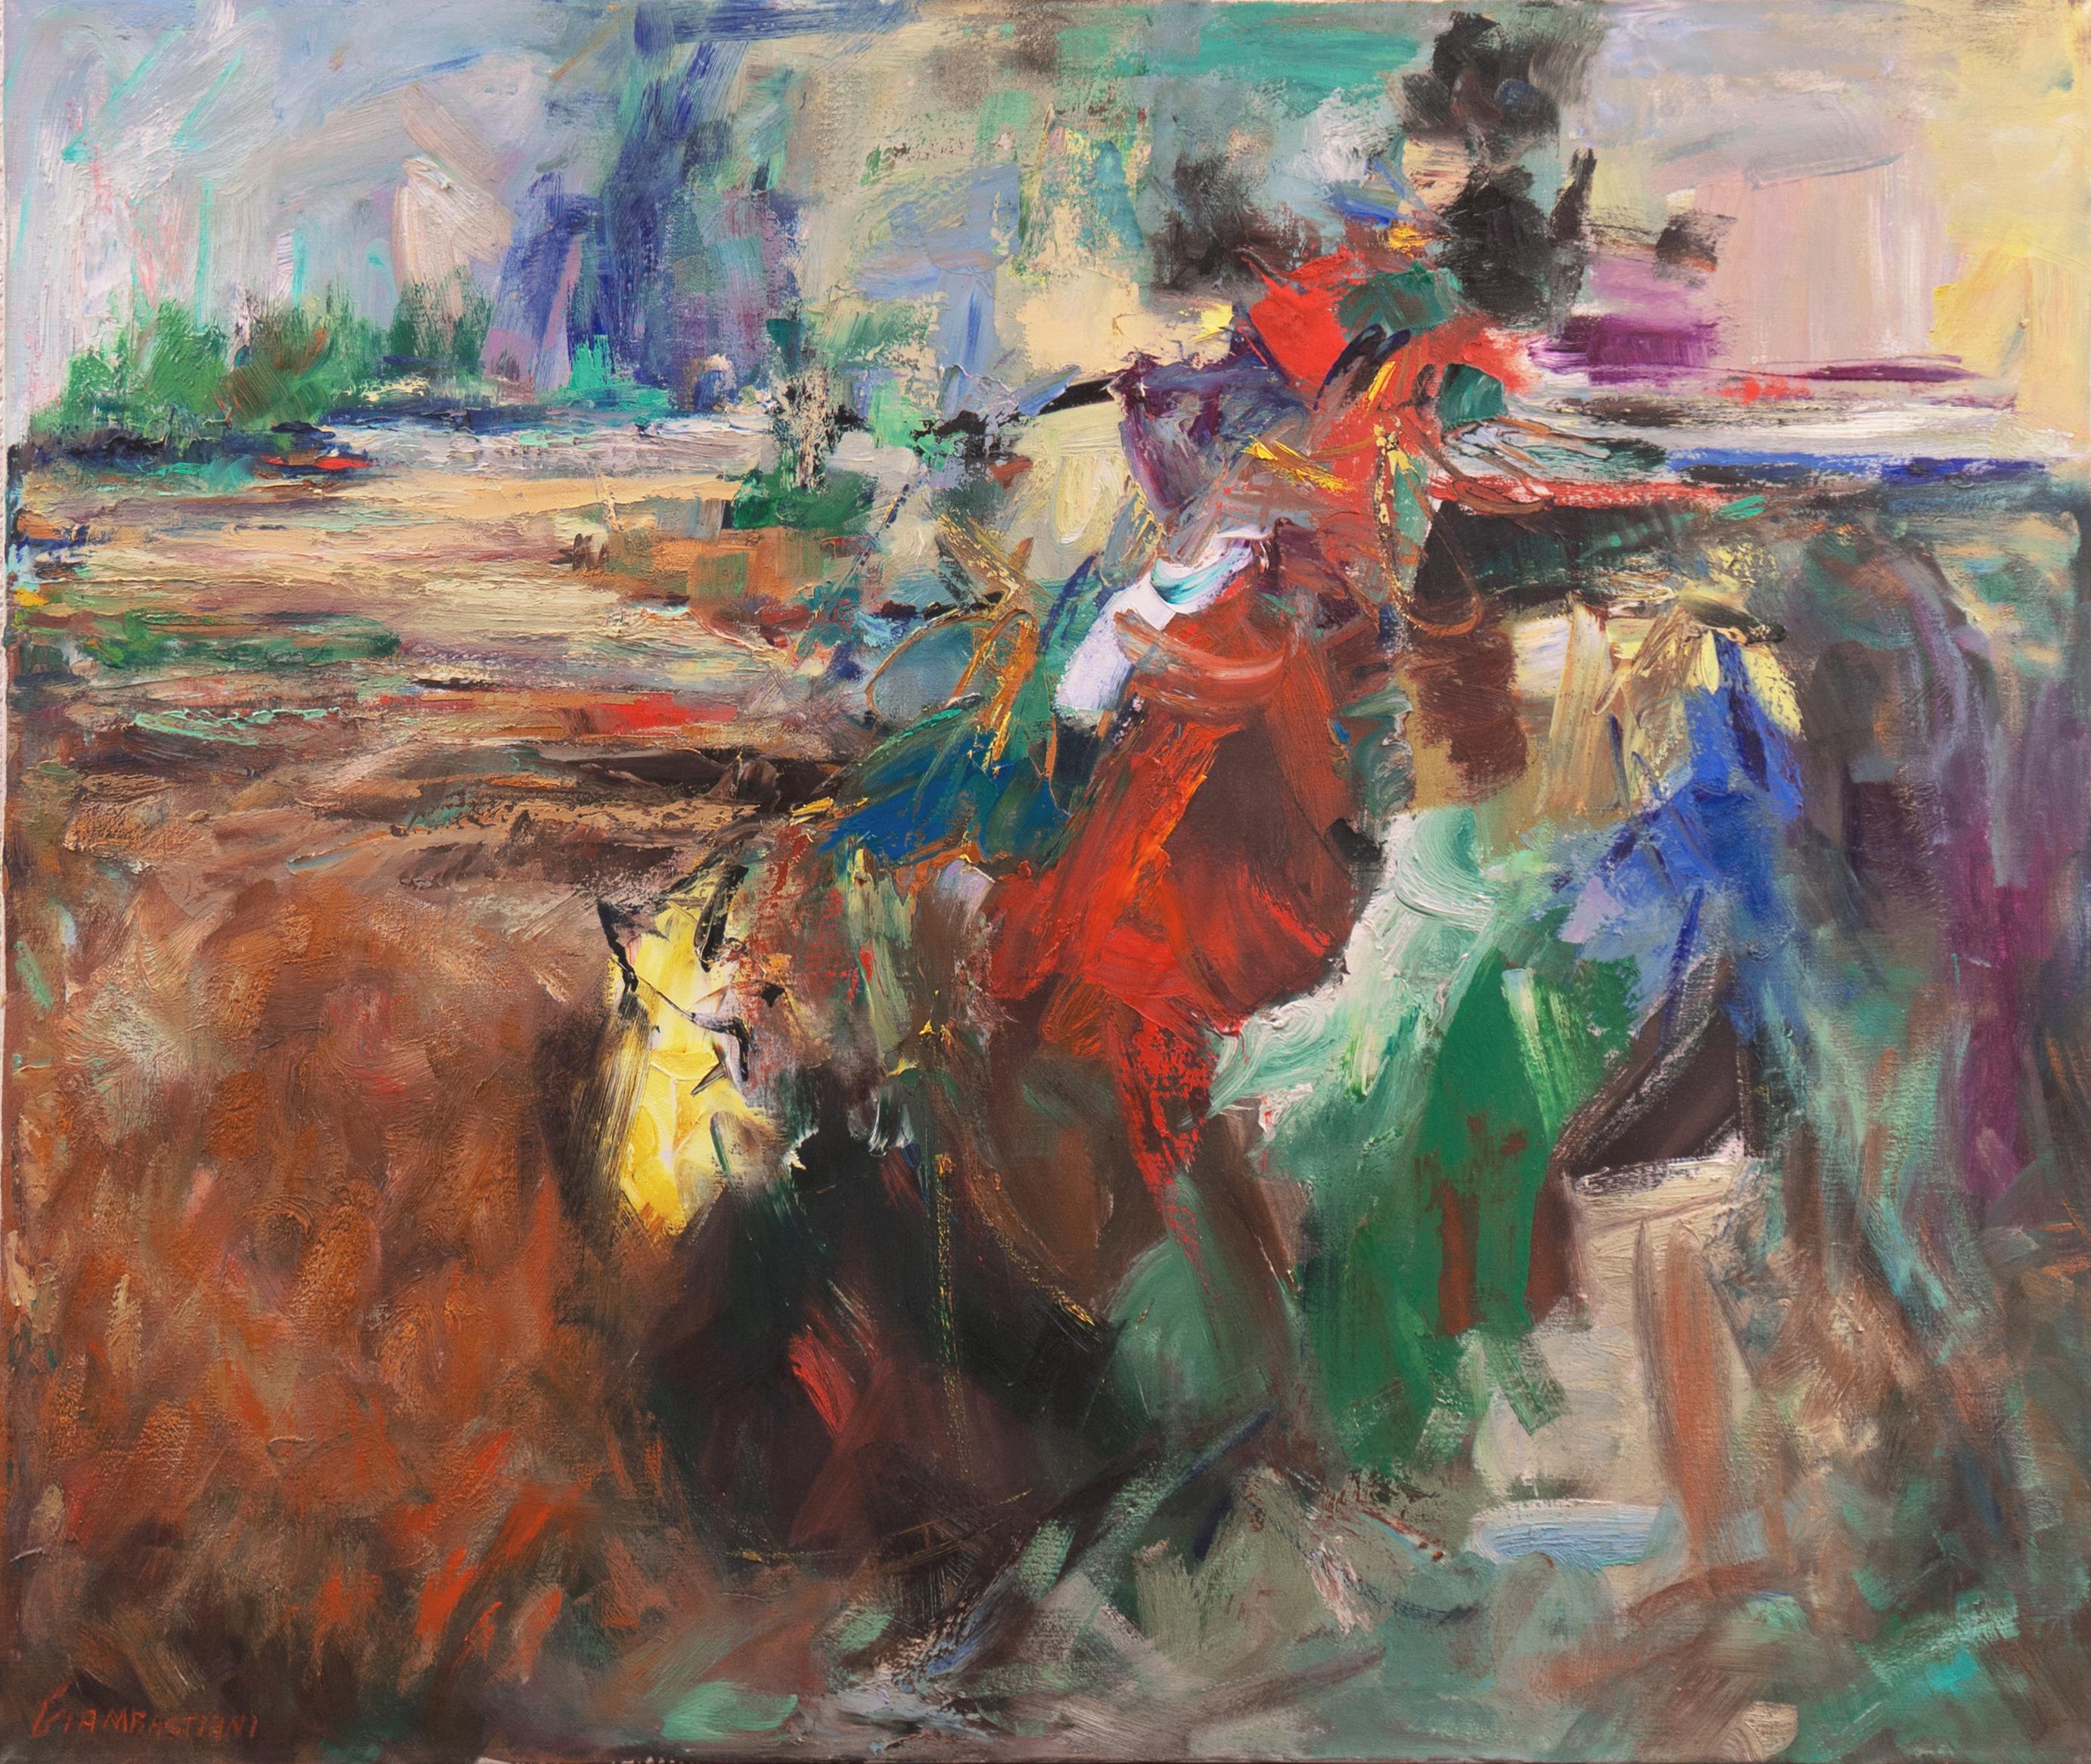 Lida Giambastiani Abstract Painting - 'Cowboy Joe', Bay Area Abstraction Oil, Woman Artist, Smithsonian, SFAA, Western